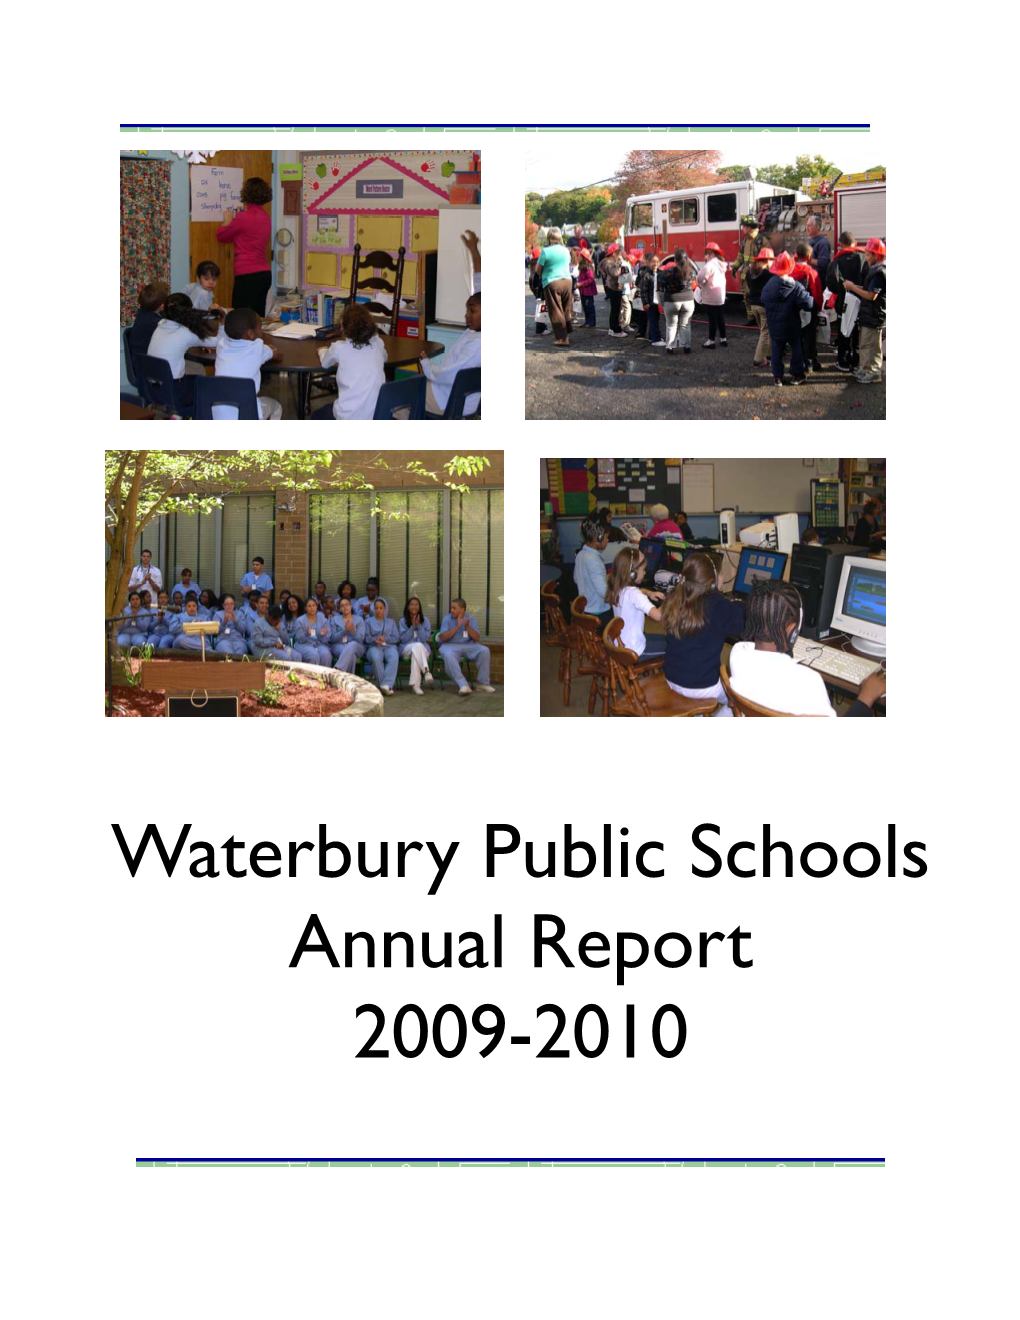 Waterbury Public Schools Annual Report 2009-2010 Waterbury Public Schools Annual Report 2009-2010